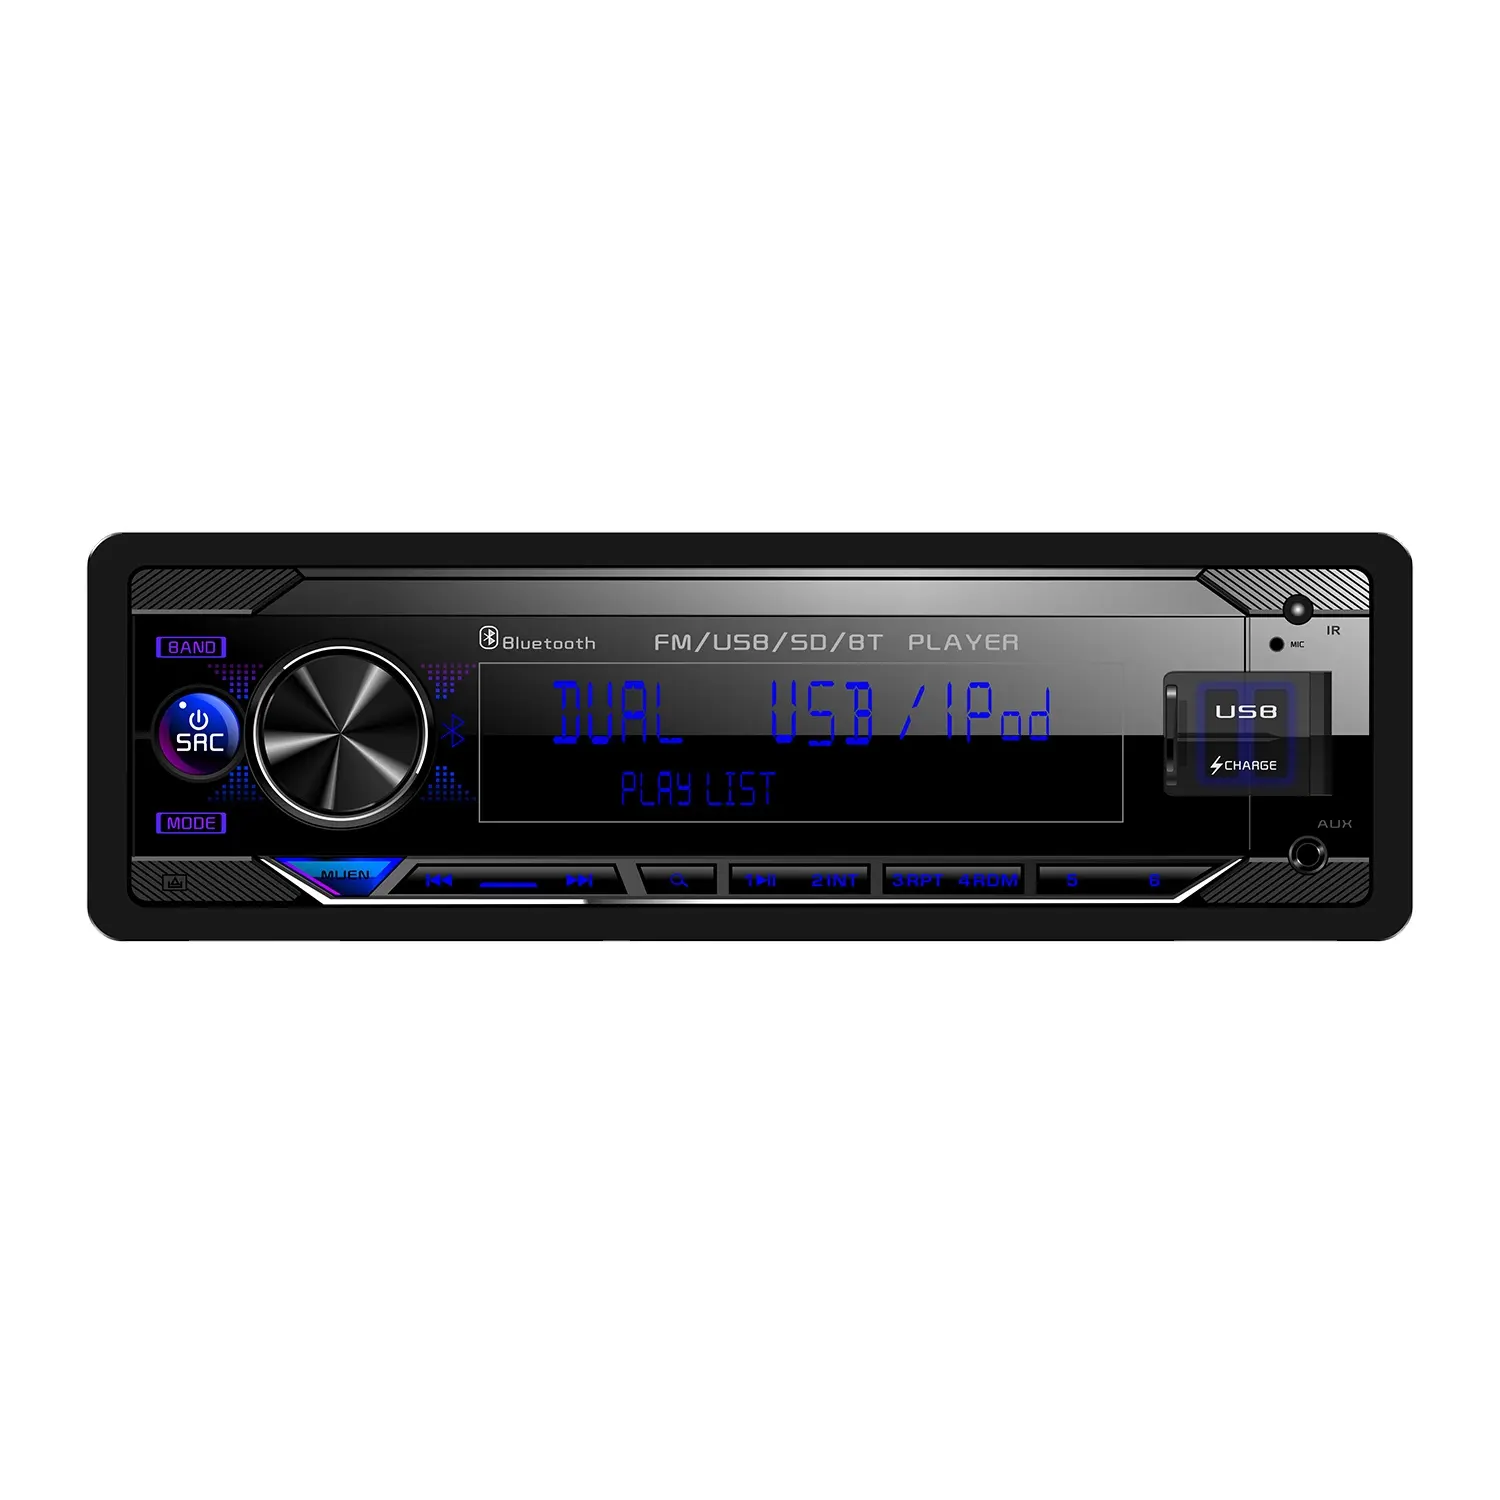 कार रेडियो बैच थोक उच्च गुणवत्ता फ्लैट पैनल डिस्प्ले नई कार एलसीडी पोर्टेबल एनालॉग टीवी